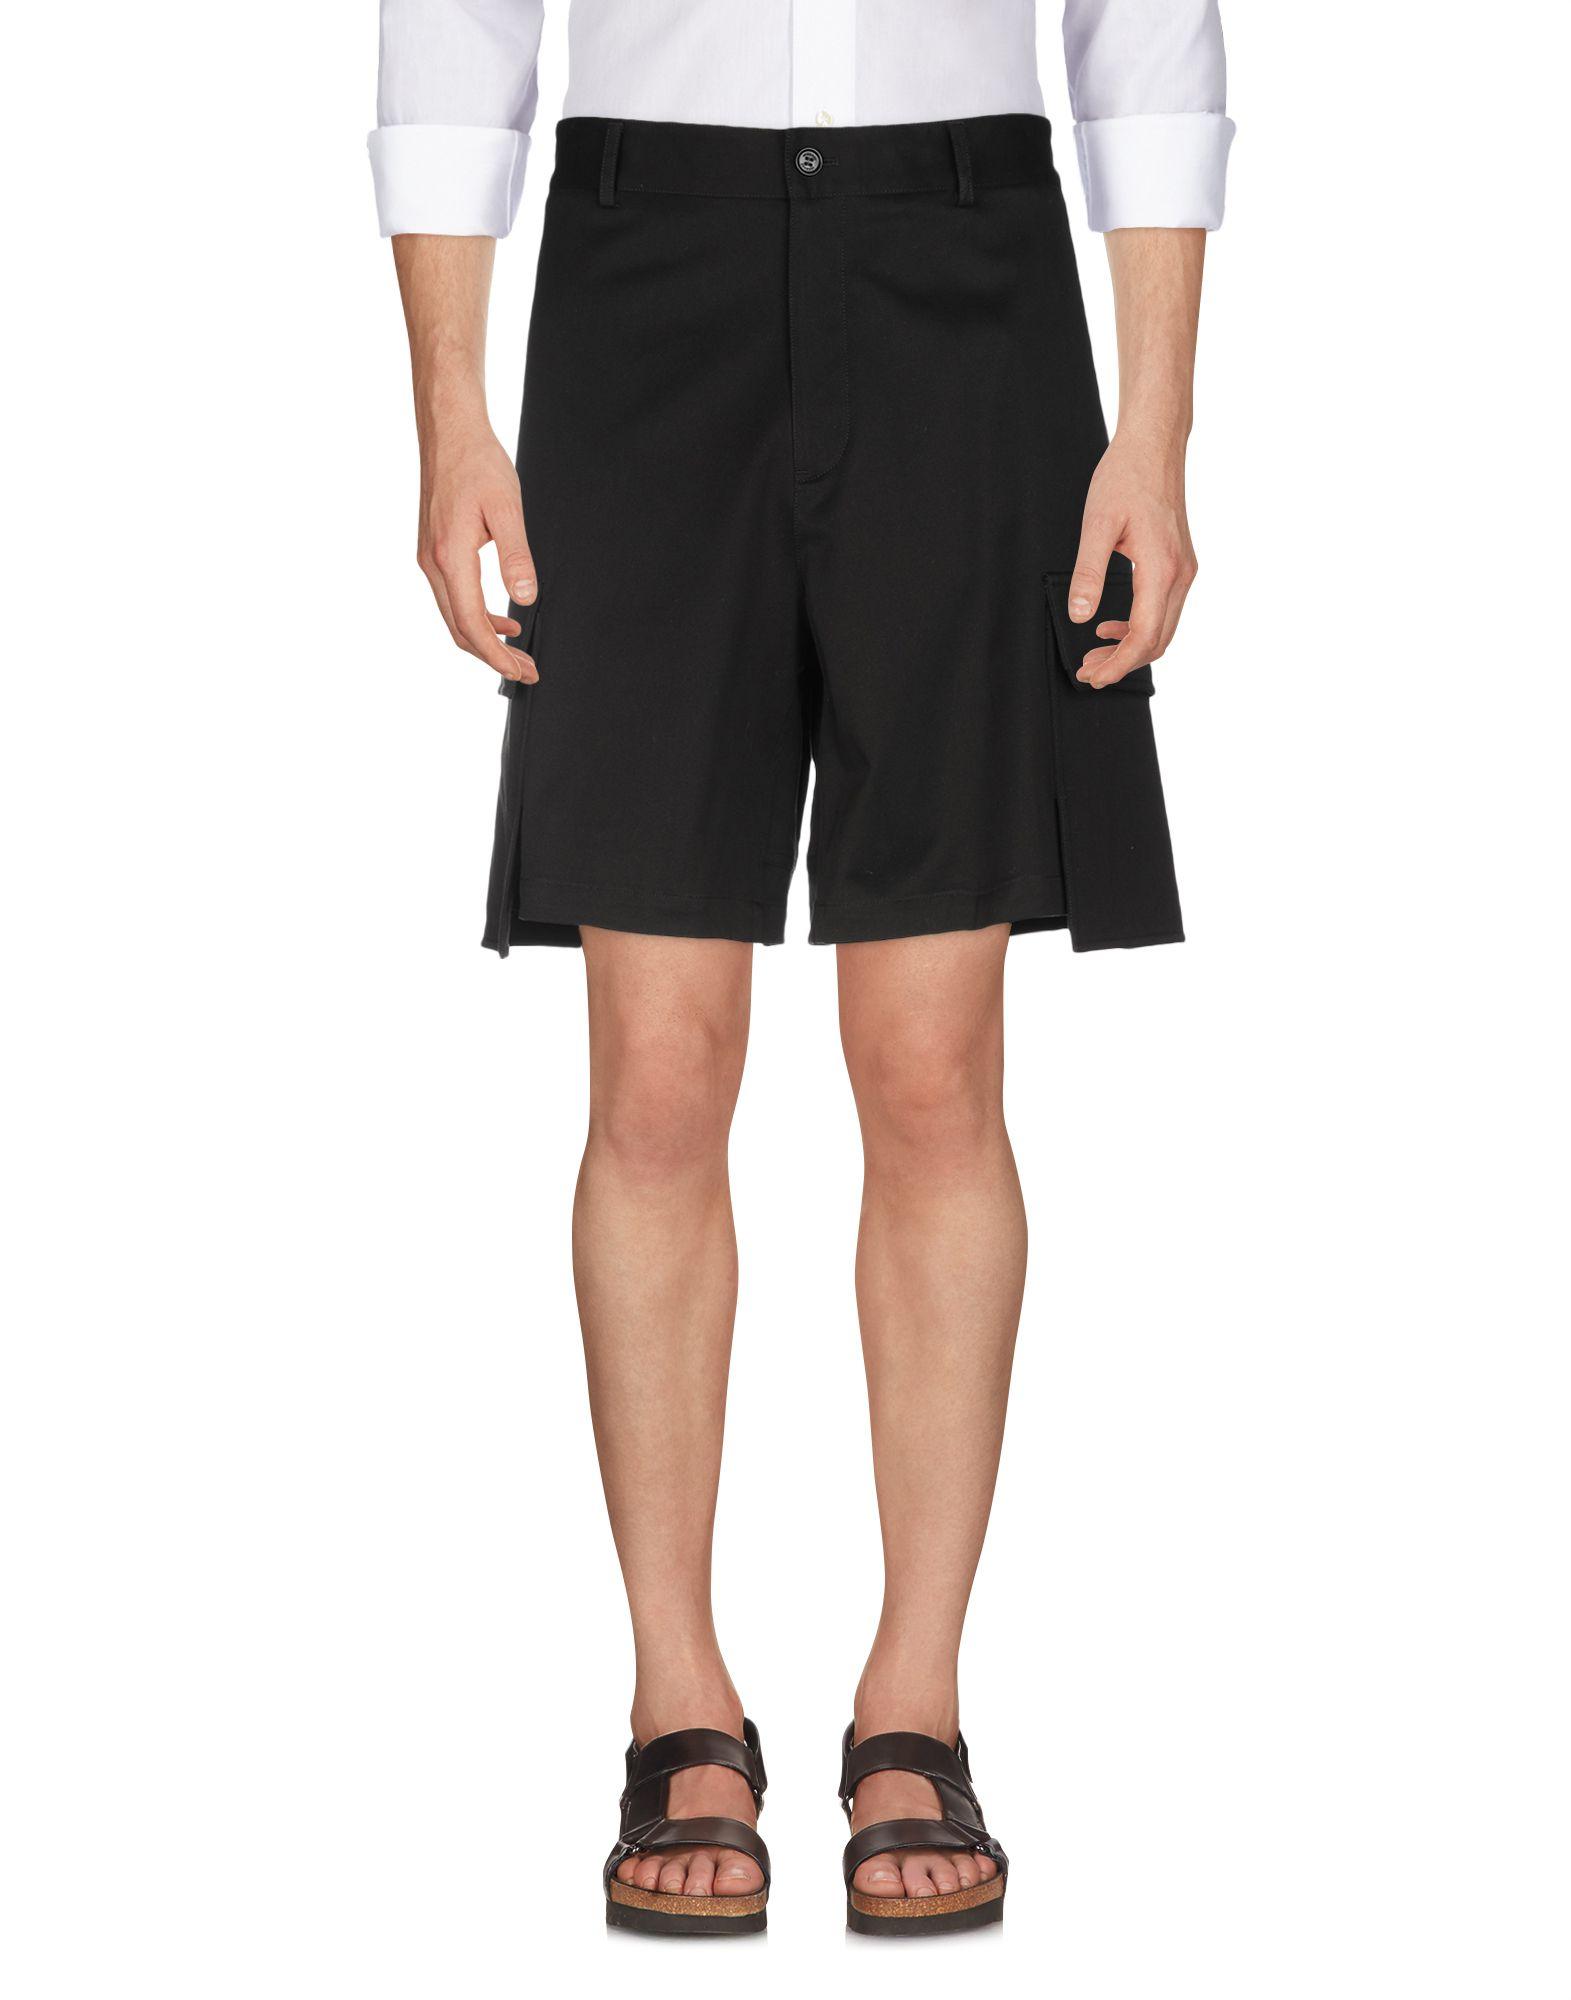 Versace Cotton Bermuda Shorts in Black for Men - Lyst